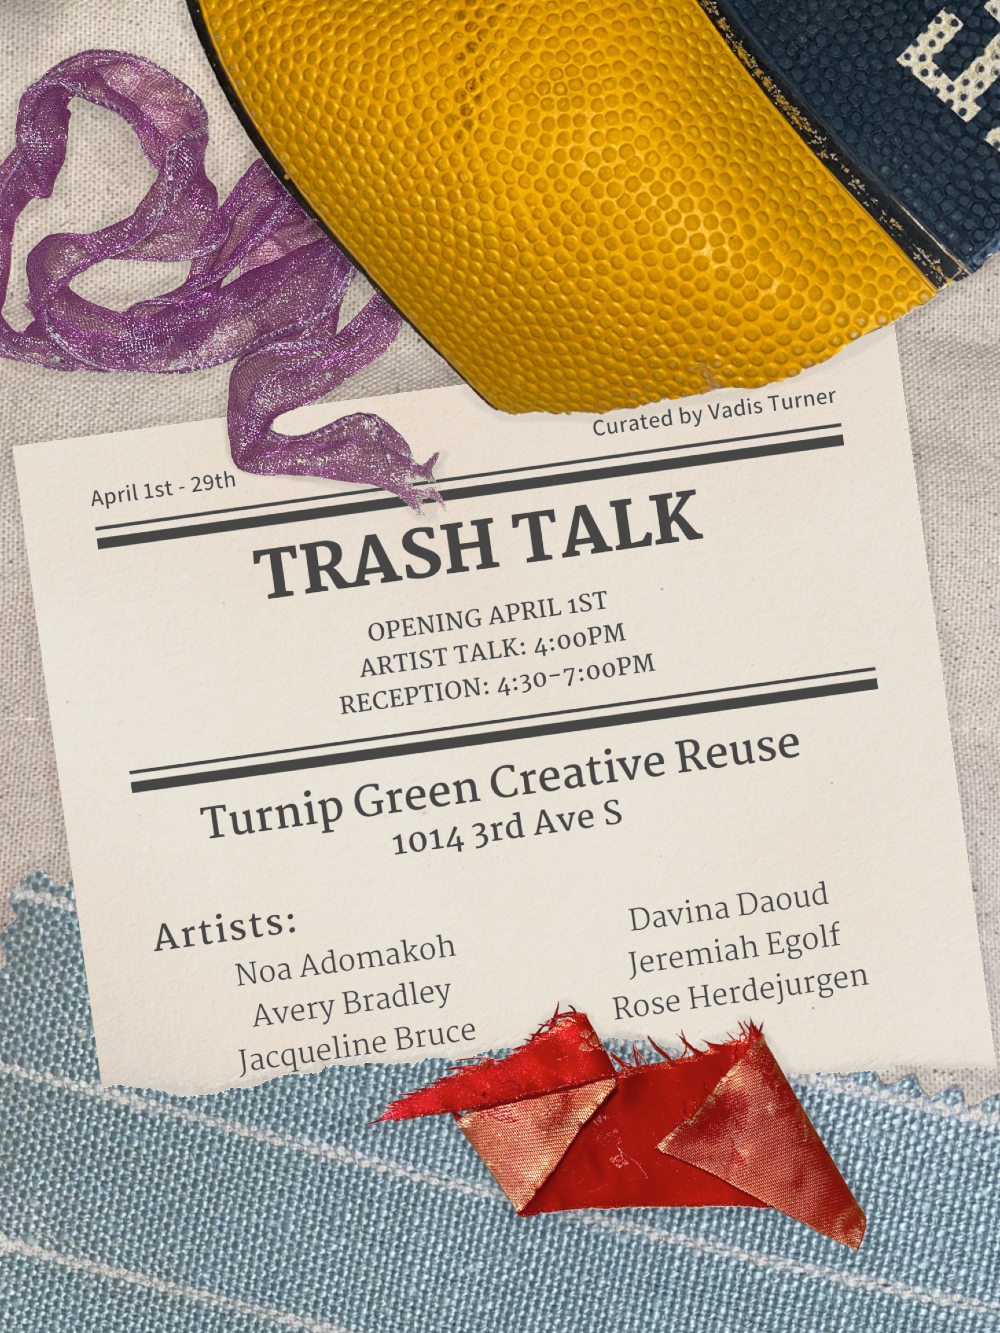 "Trash Talk" exhibition at Turnip Green Creative Reuse